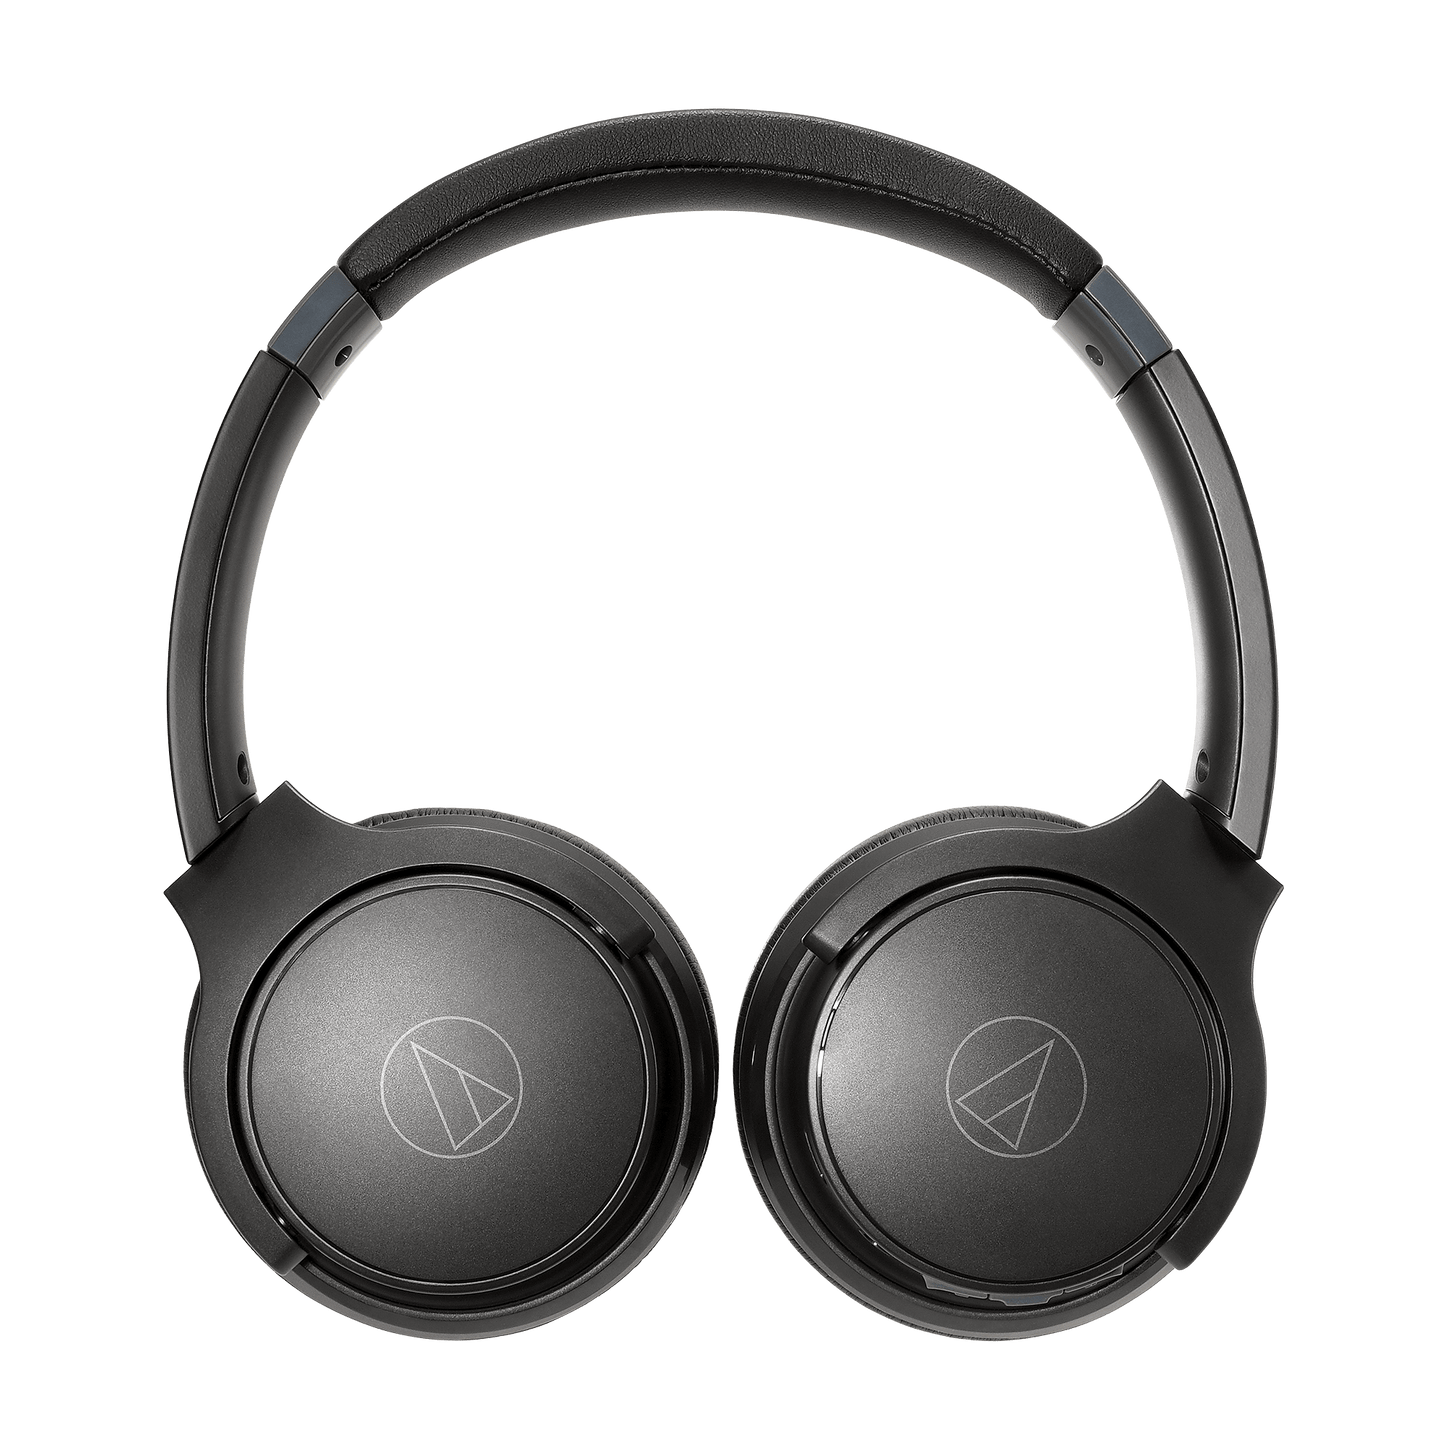 Audio-Technica ATH-S220BT Wireless On-Ear Headphones